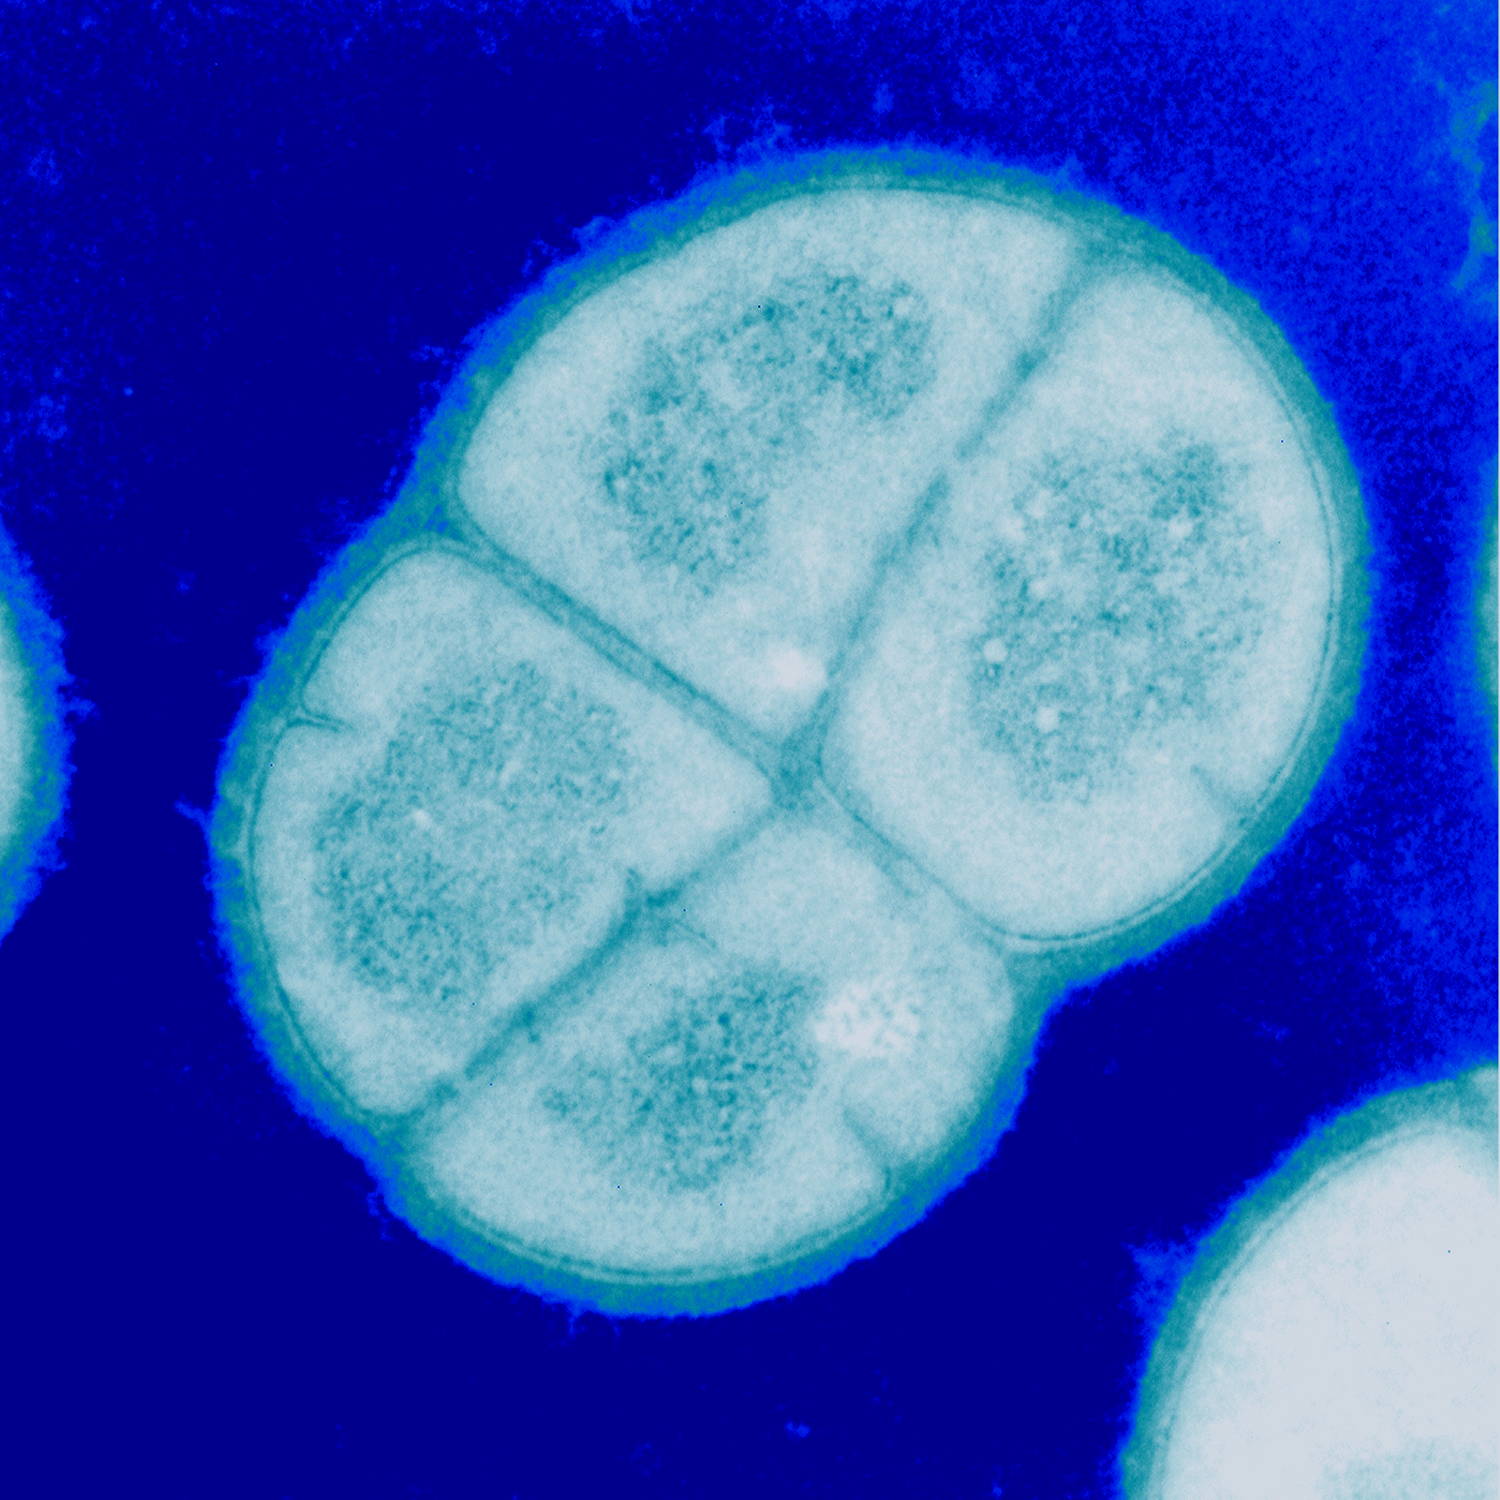 Colonized extremophile Deinococcus radiodurans alleviates toxicity